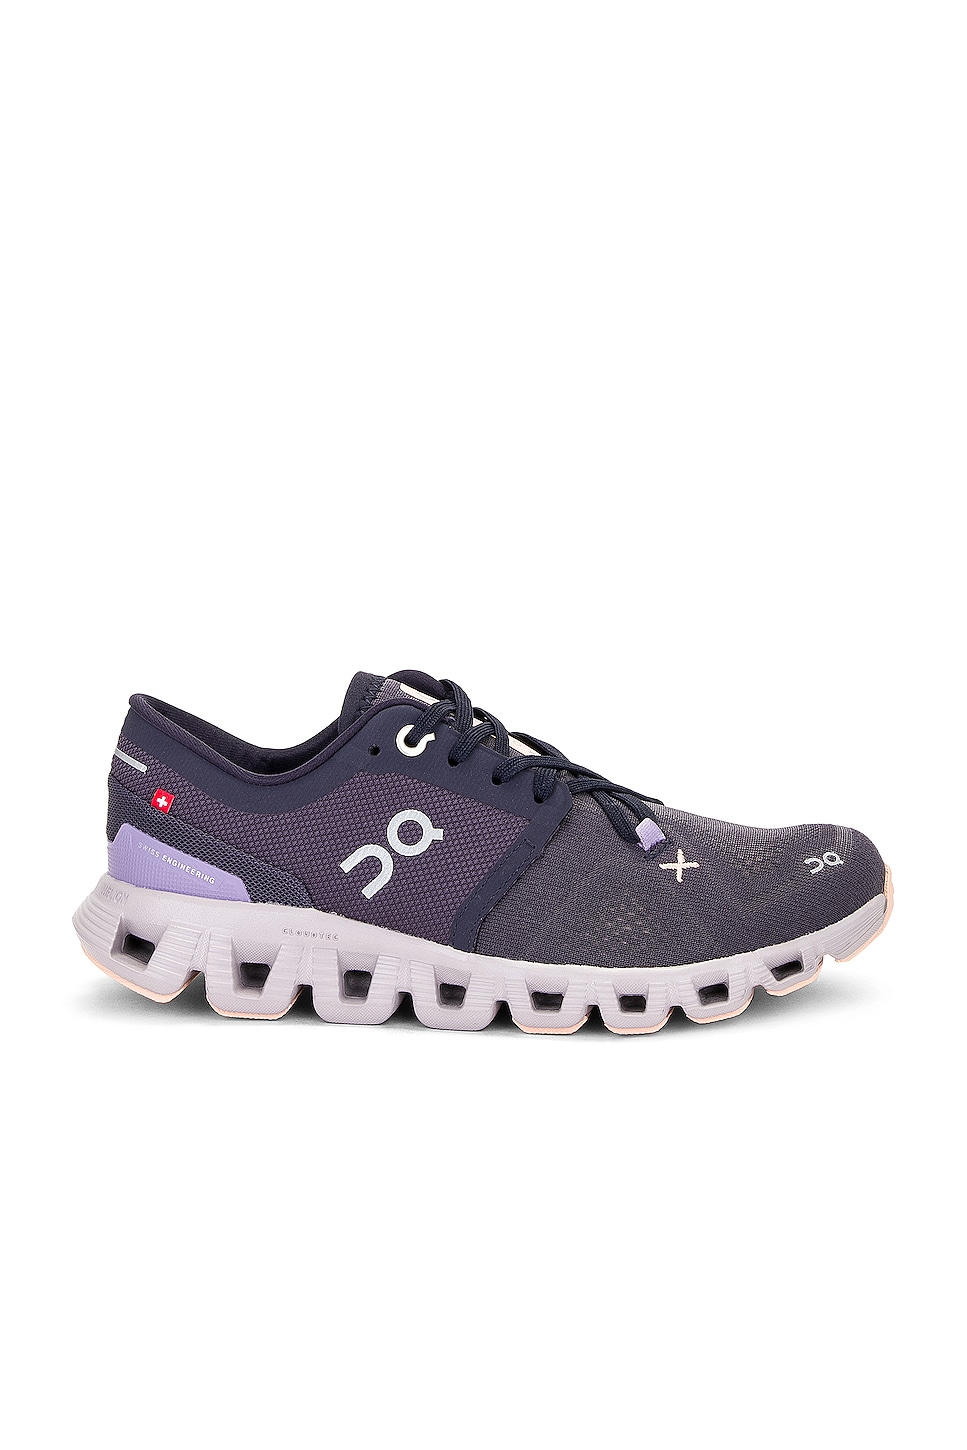 Image 1 of On Cloud X 3 Sneaker in Iron & Fade